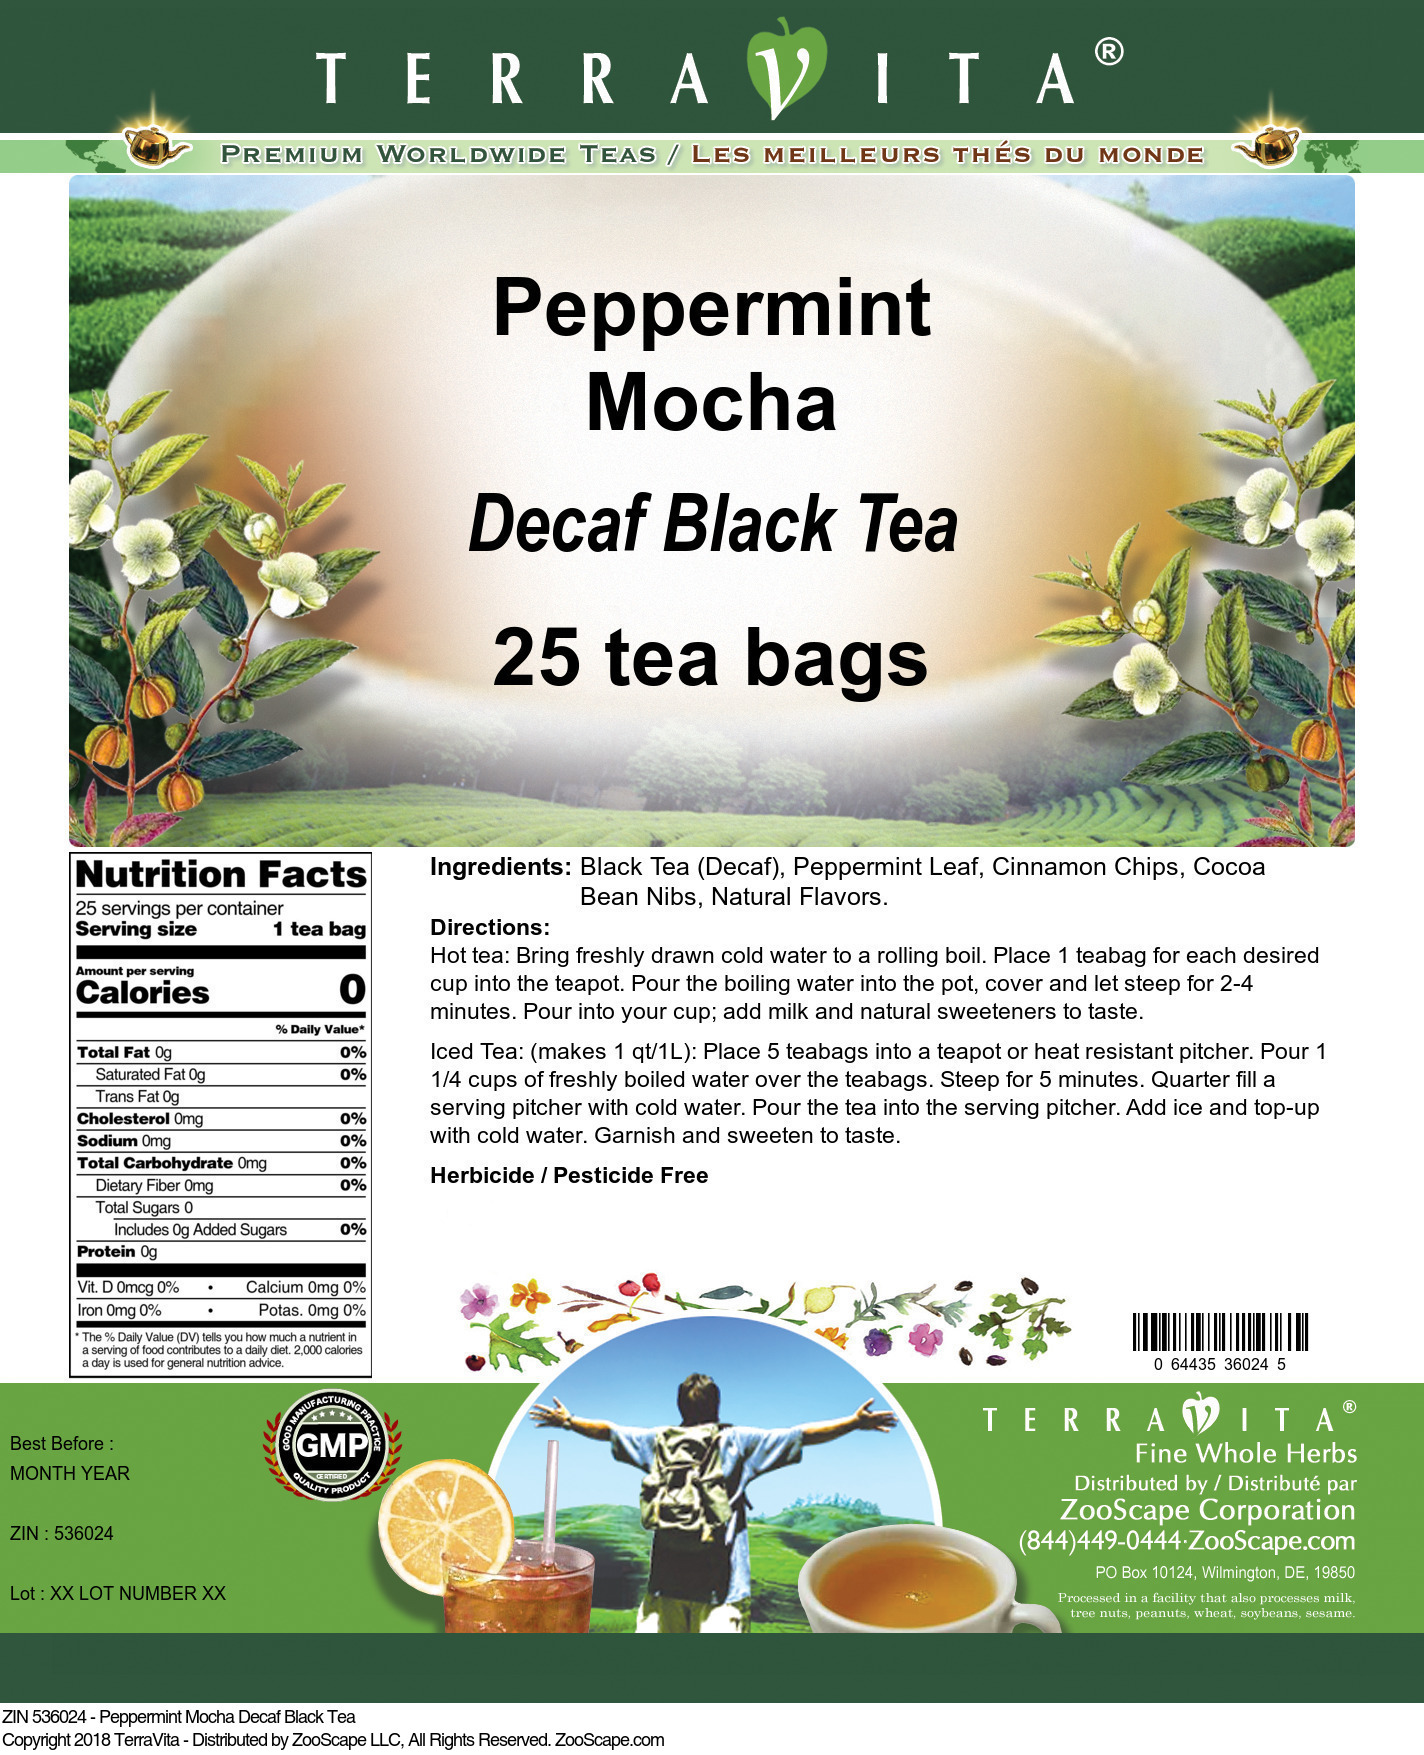 Peppermint Mocha Decaf Black Tea - Label